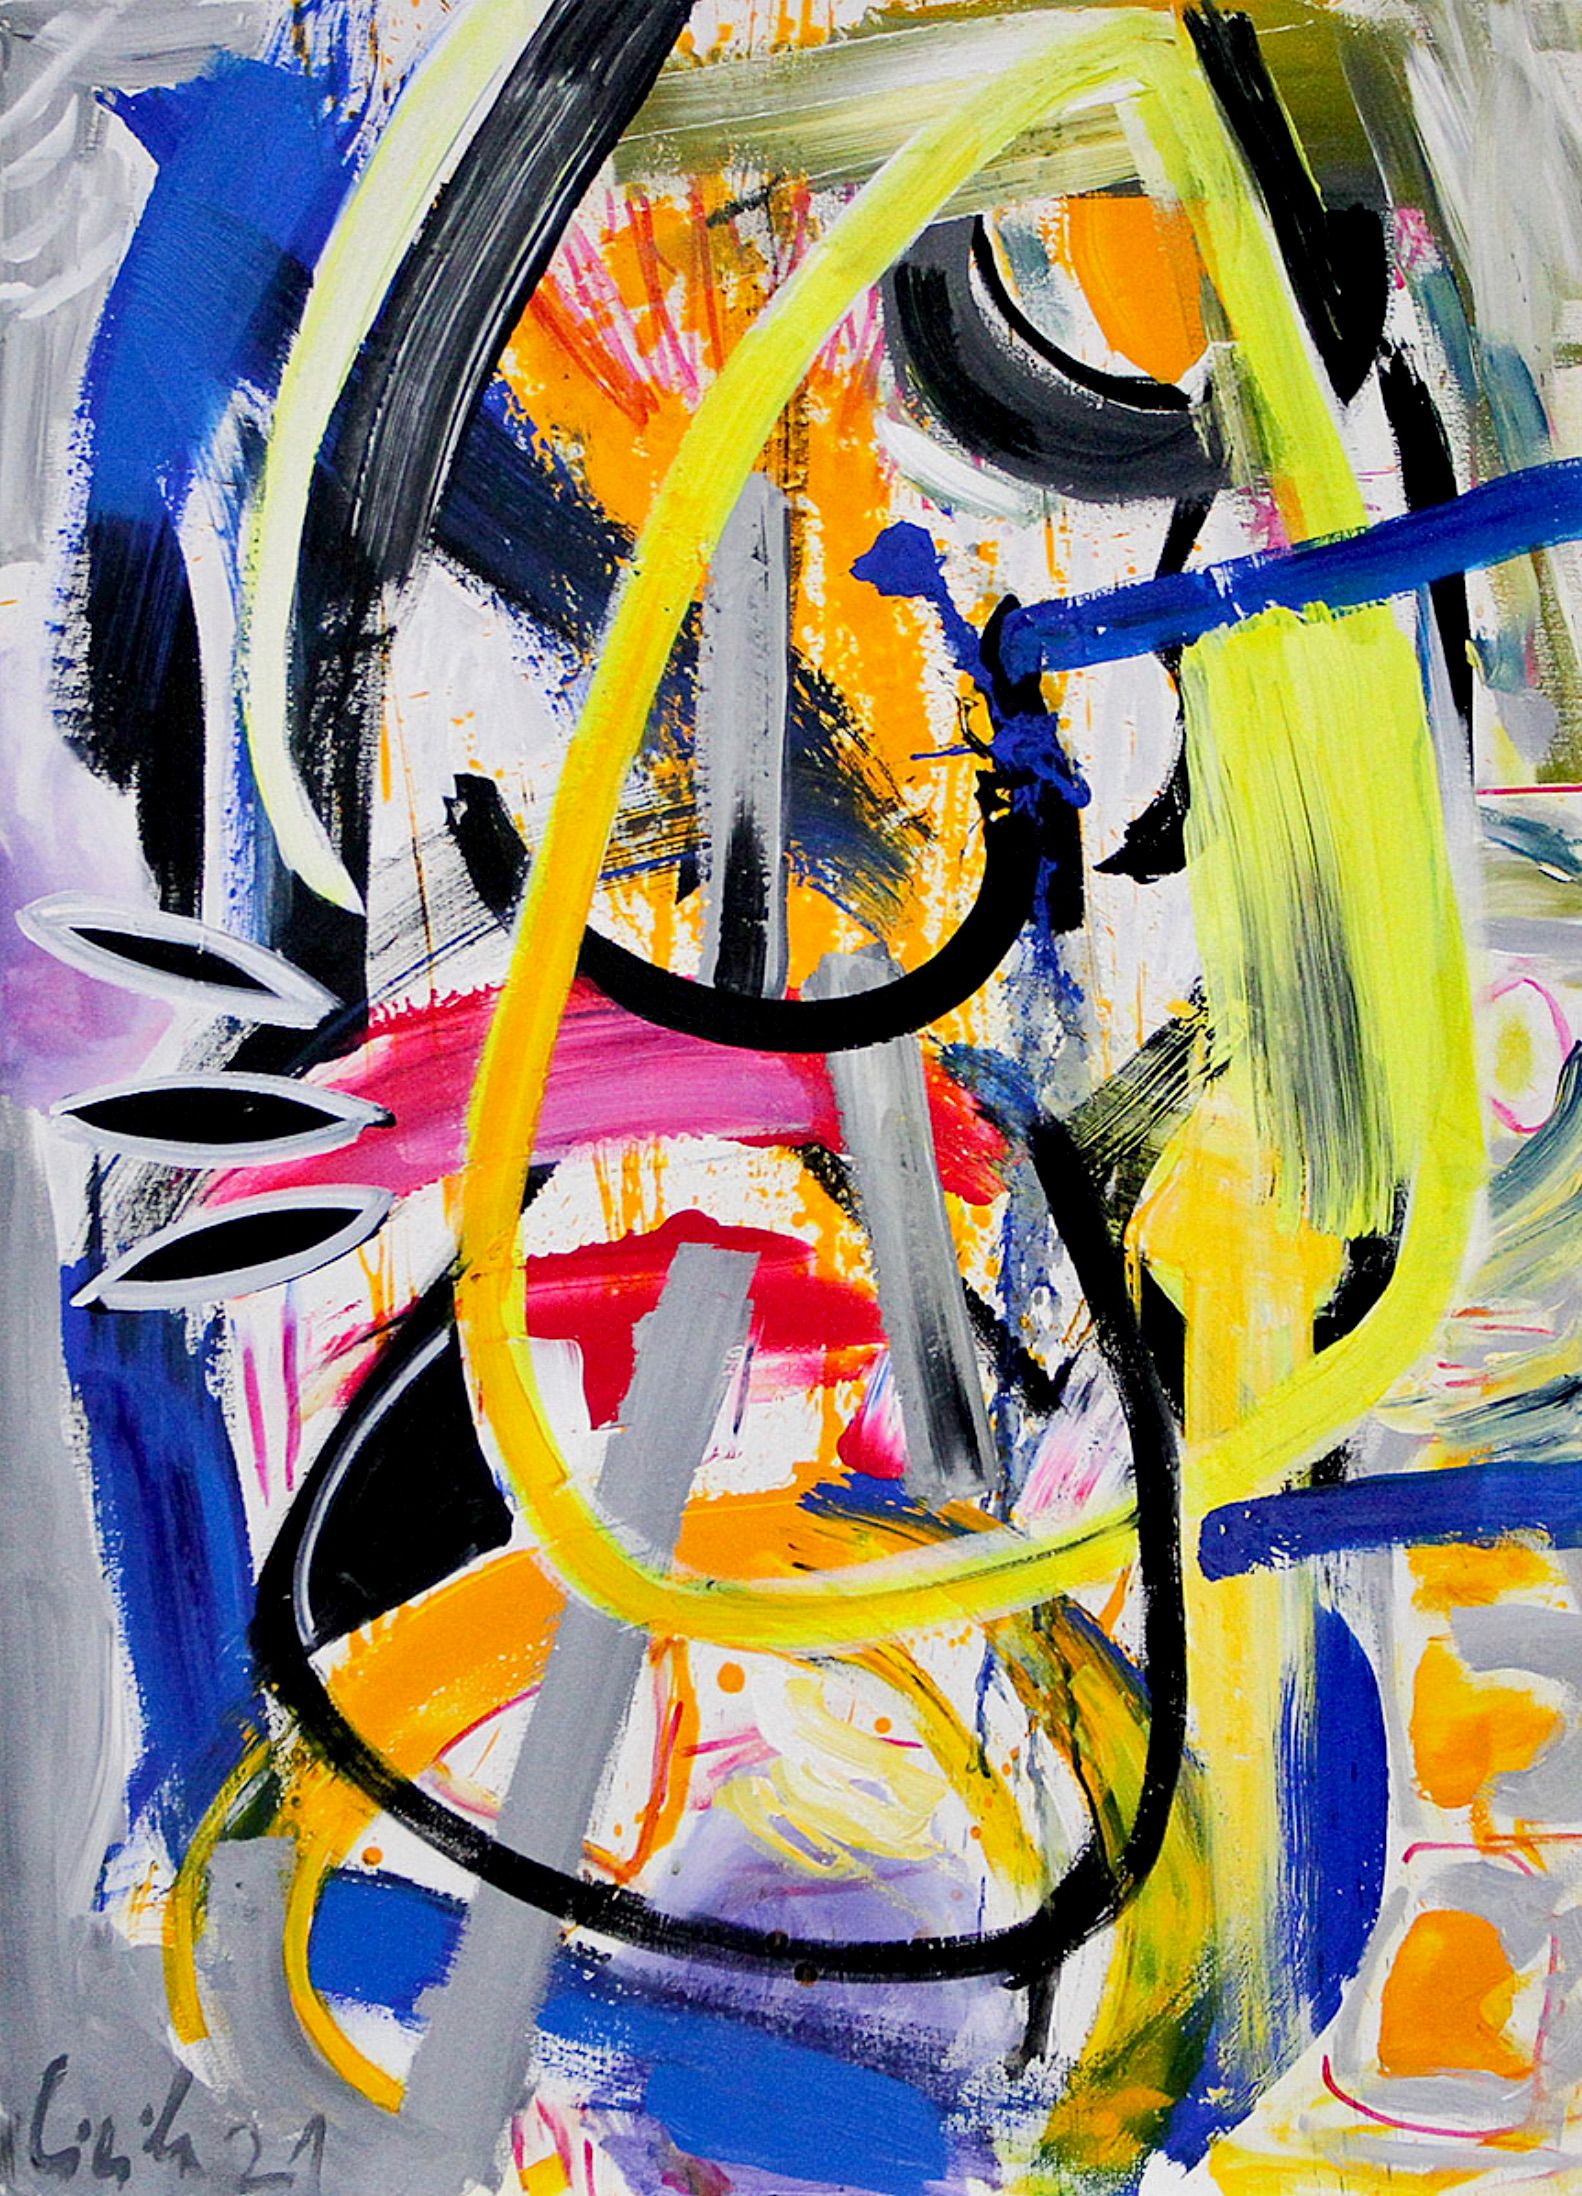 MECESLA Maciej Cieśla, "Tableau inspiré de la musique-Fatboy Slim 3", Peinture abstraite colorée sur toile